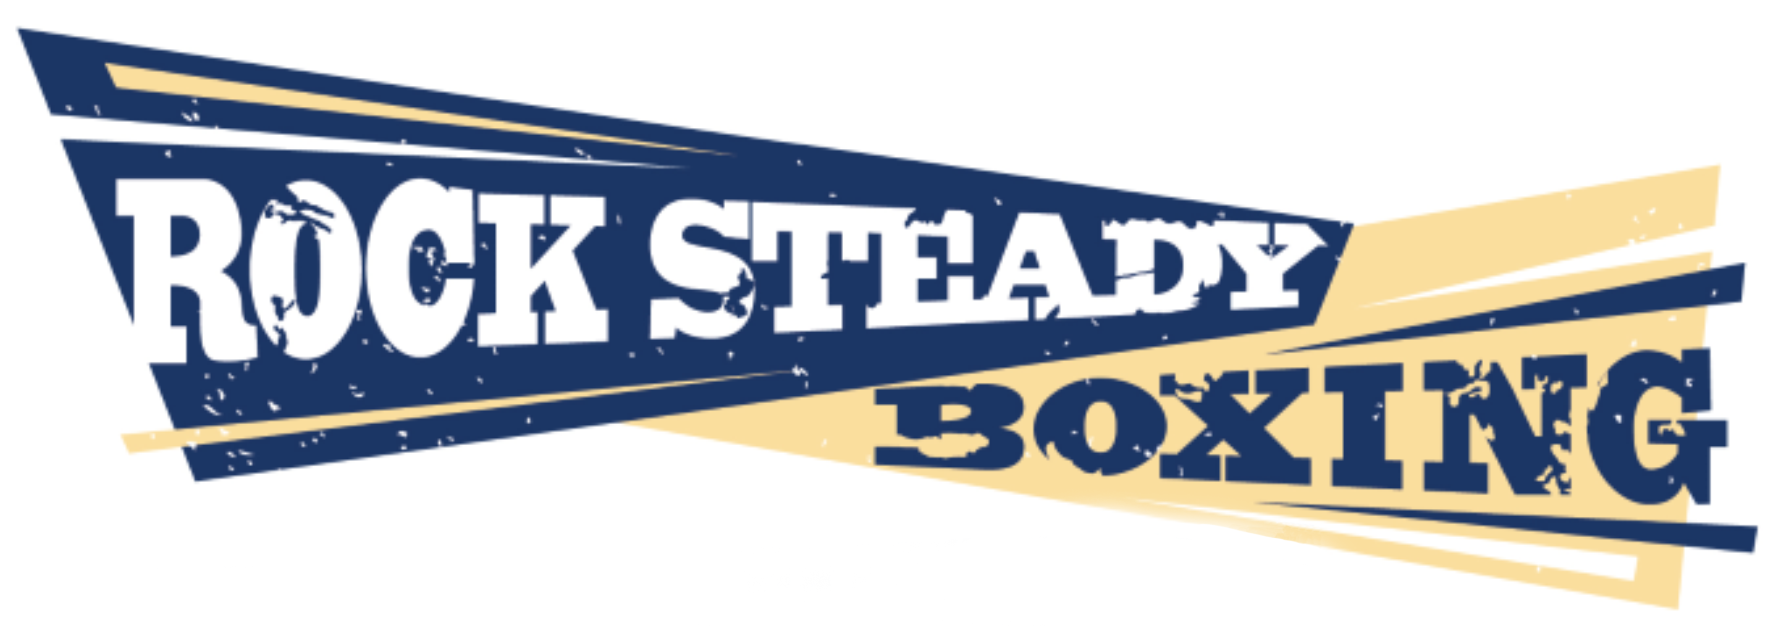 Rocksteady Boxing logo